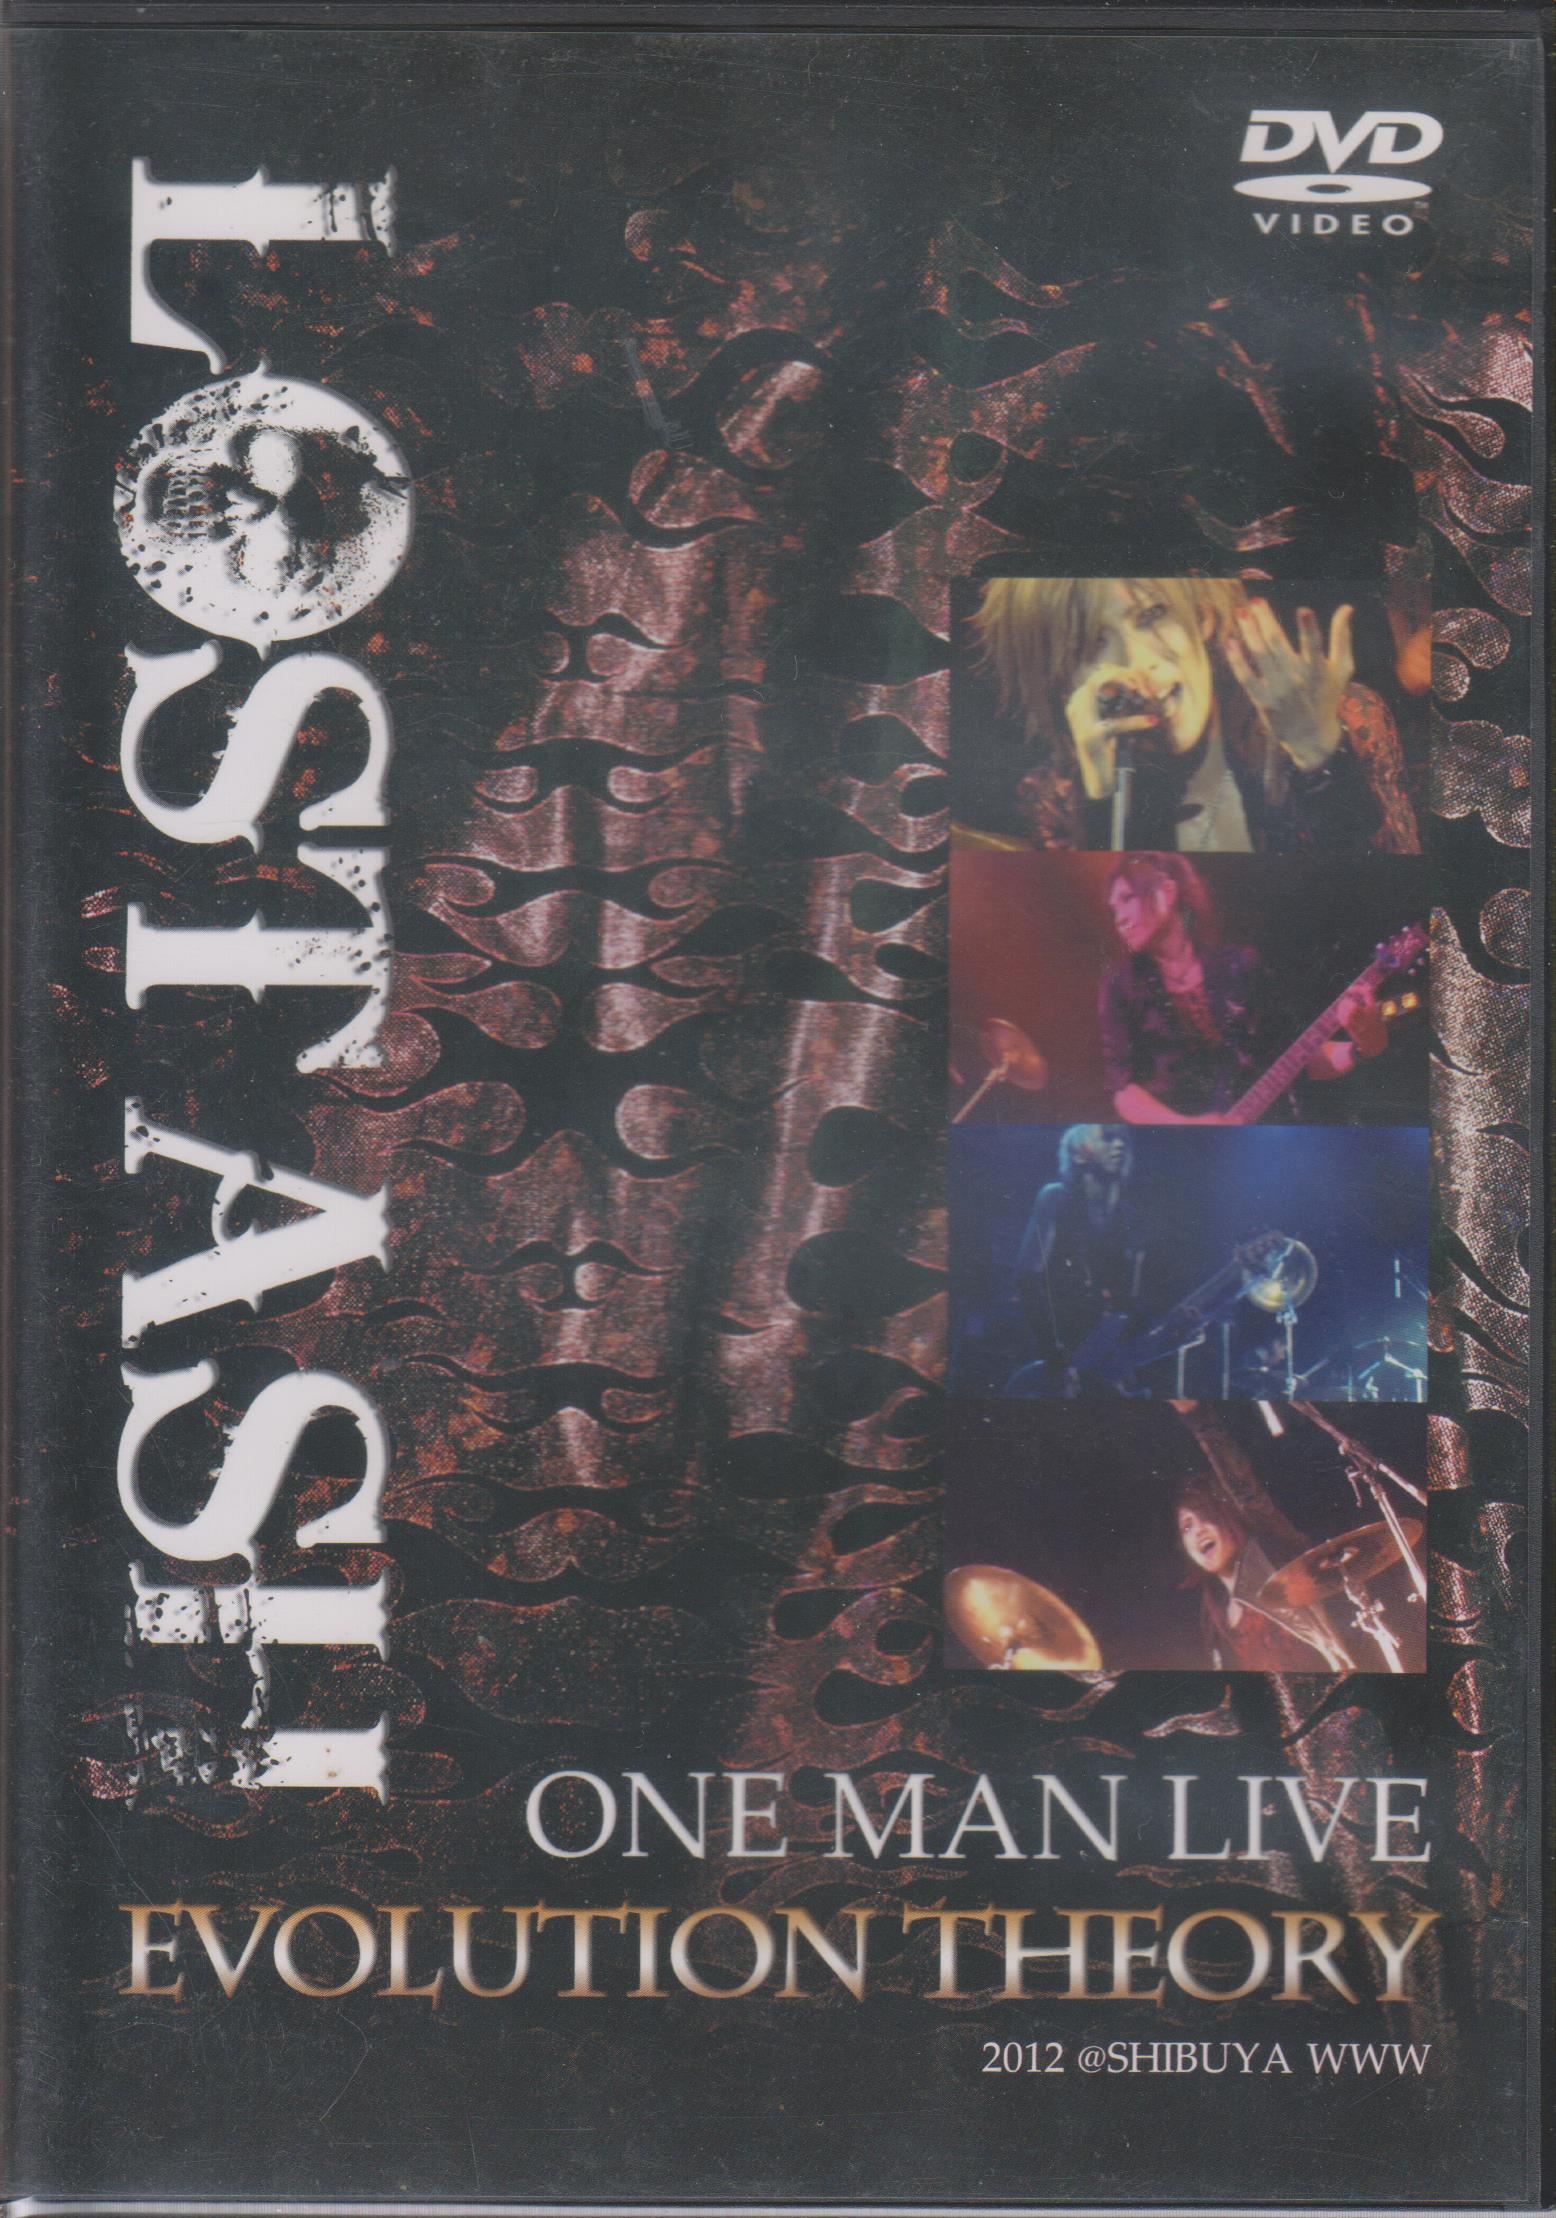 LOST ASH ( ロストアッシュ )  の DVD EVOLUTION THEORY